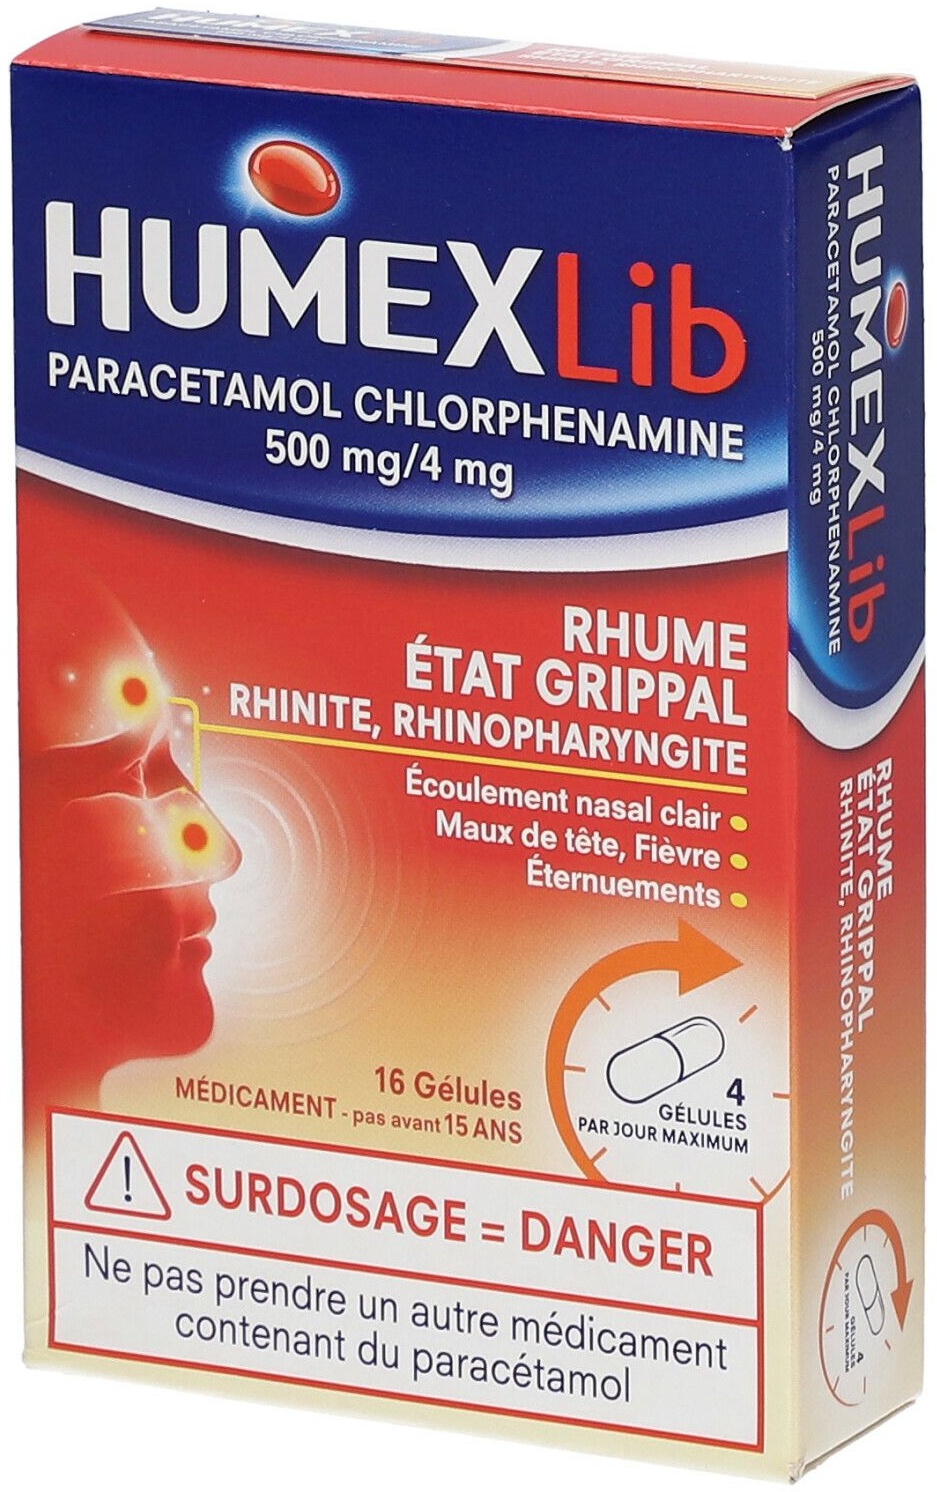 Humexlib 500 mg/4 mg 16 pc(s) capsule(s)